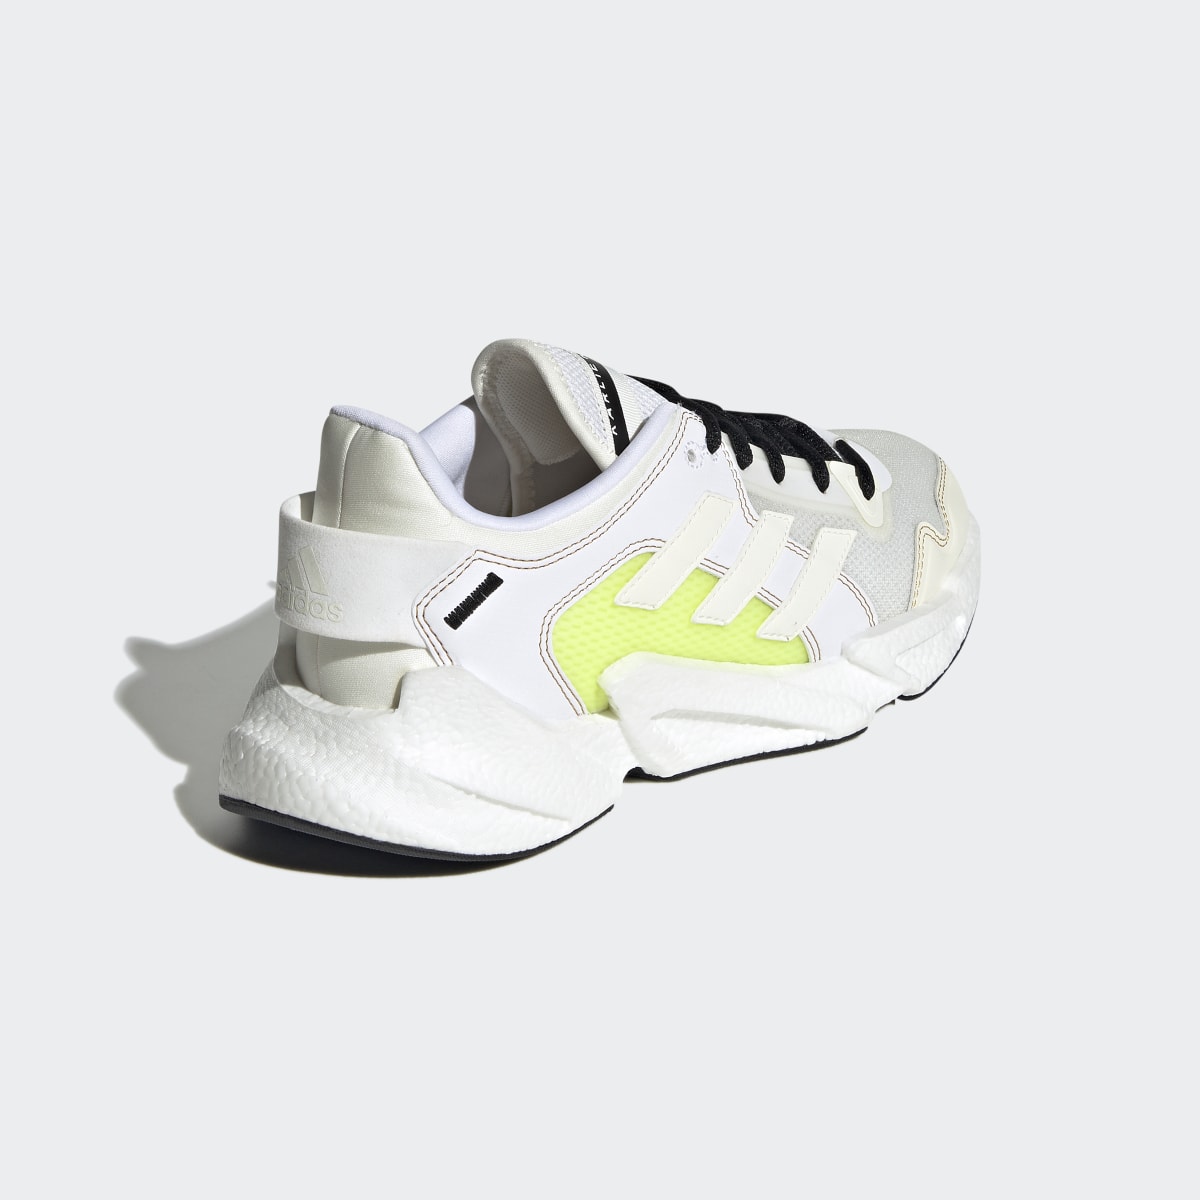 Adidas Karlie Kloss X9000 Shoes. 6